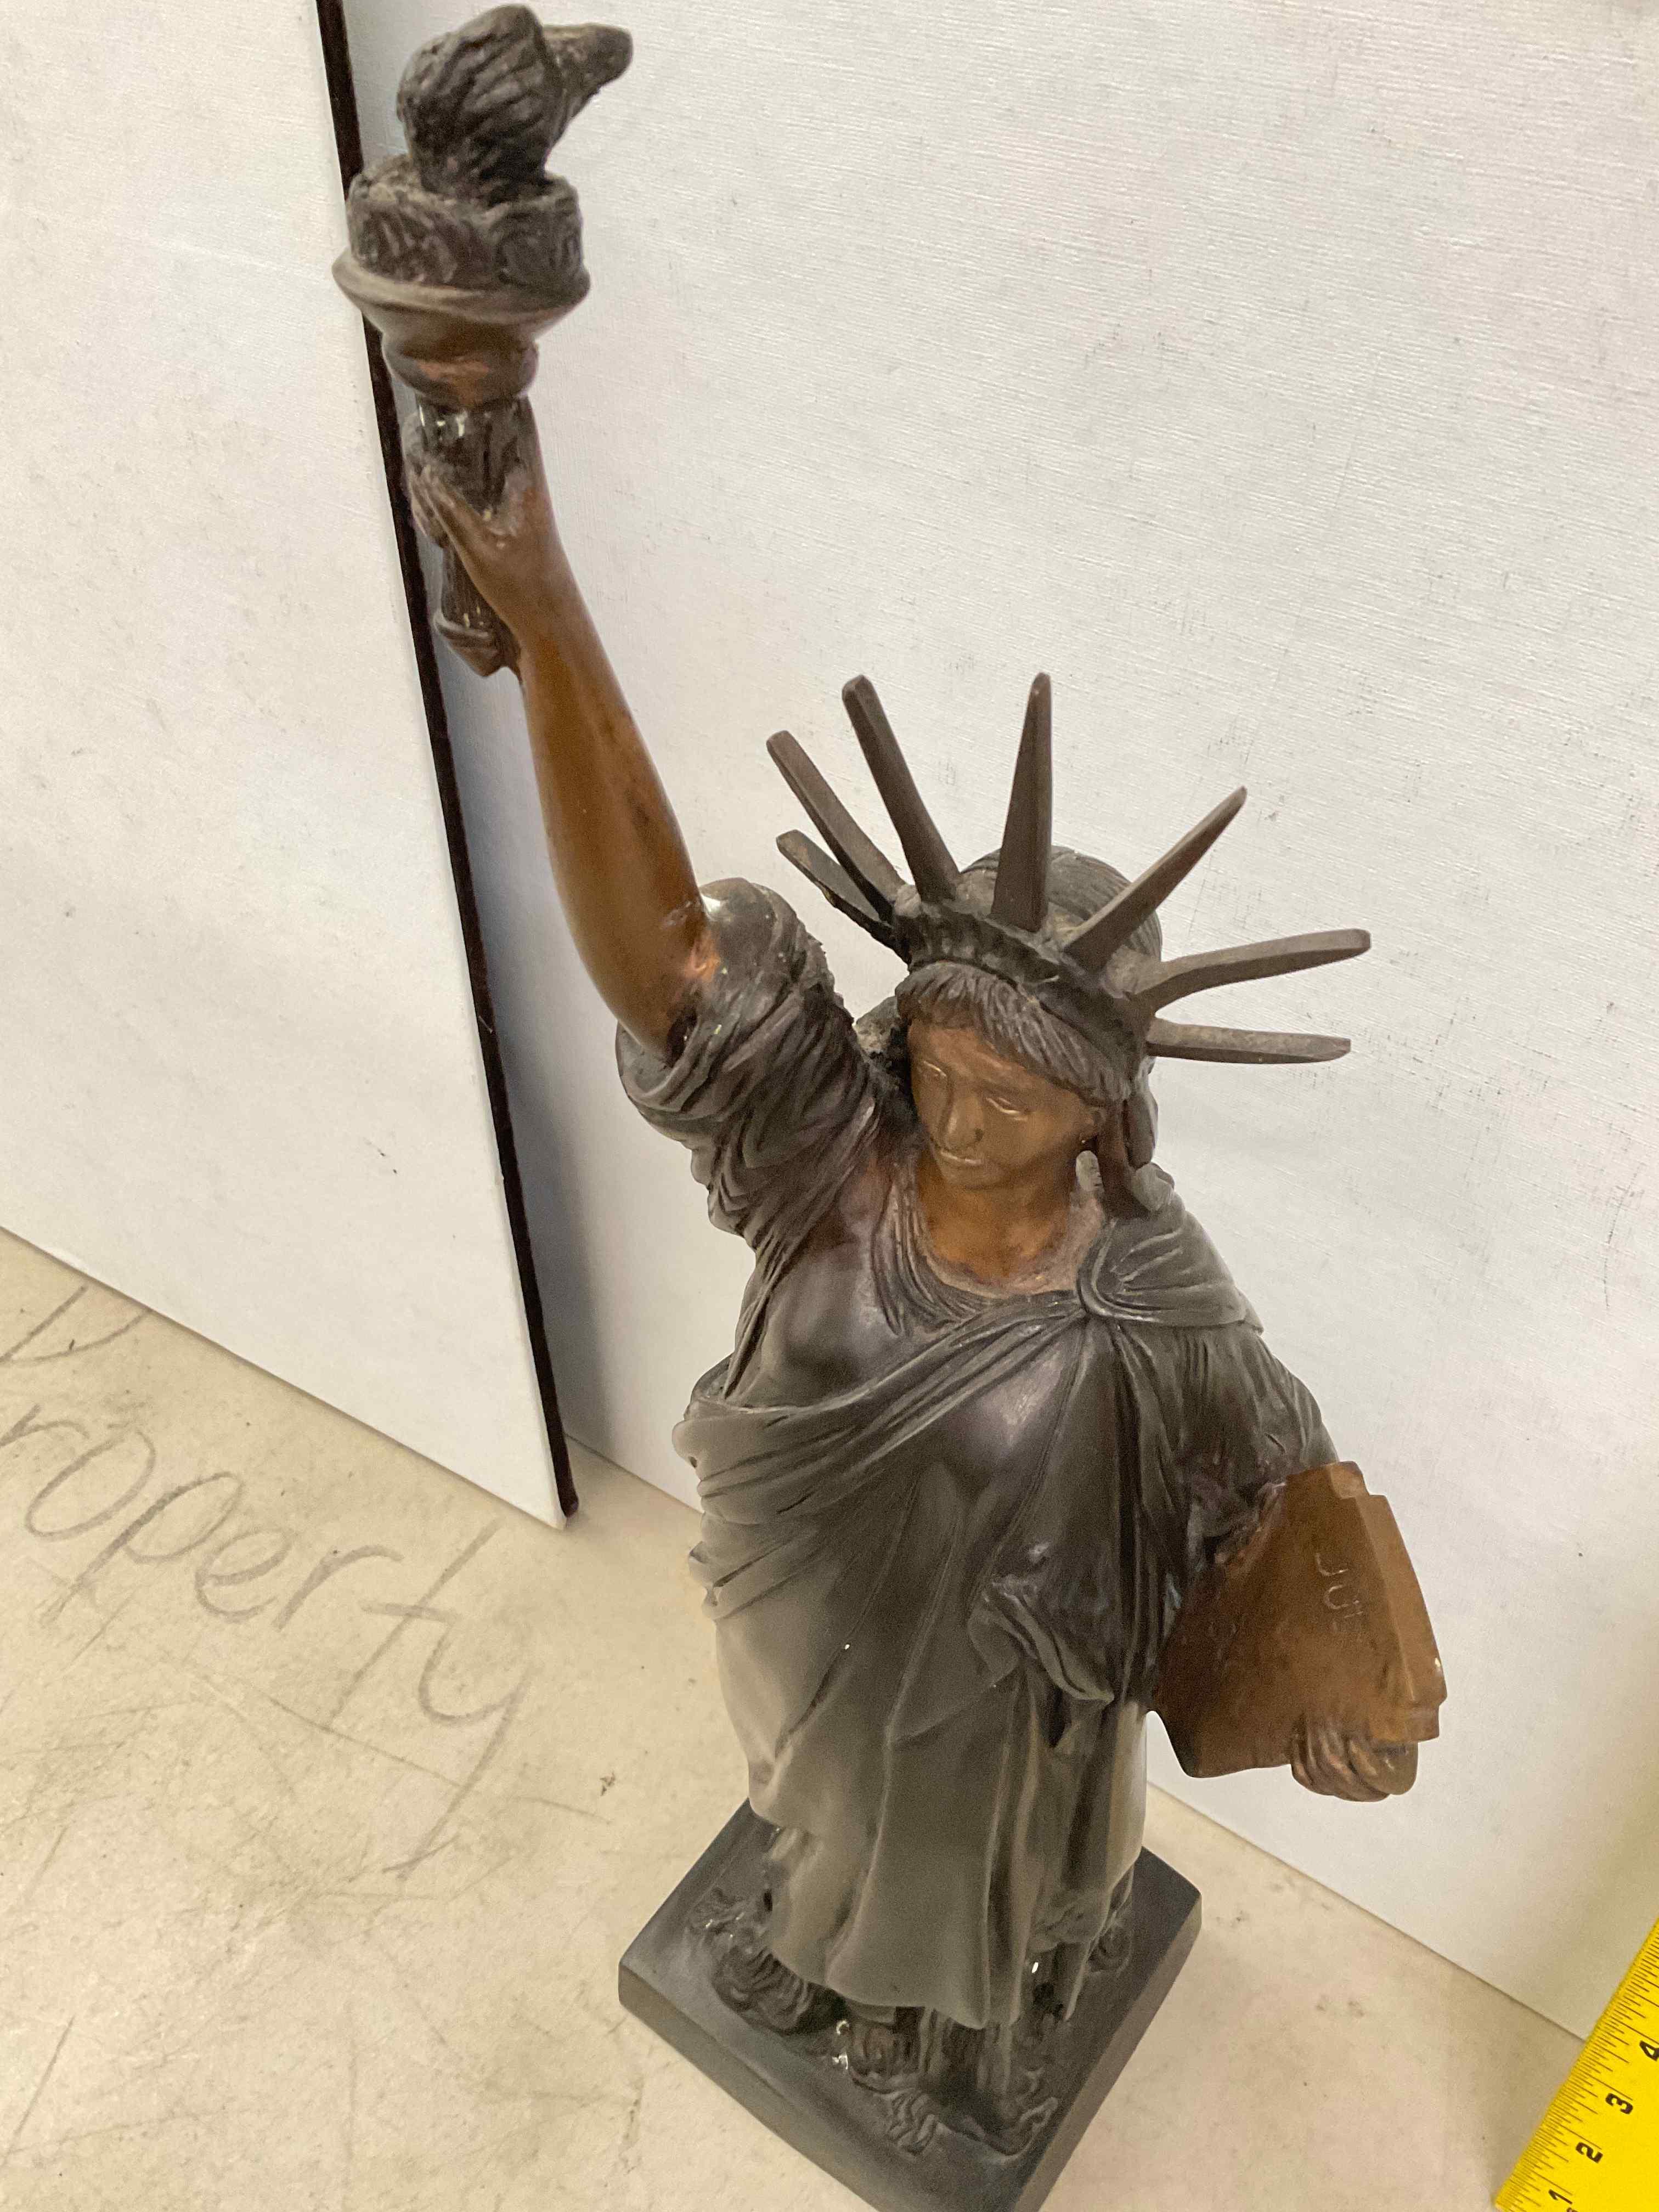 Metal Statue Of Liberty